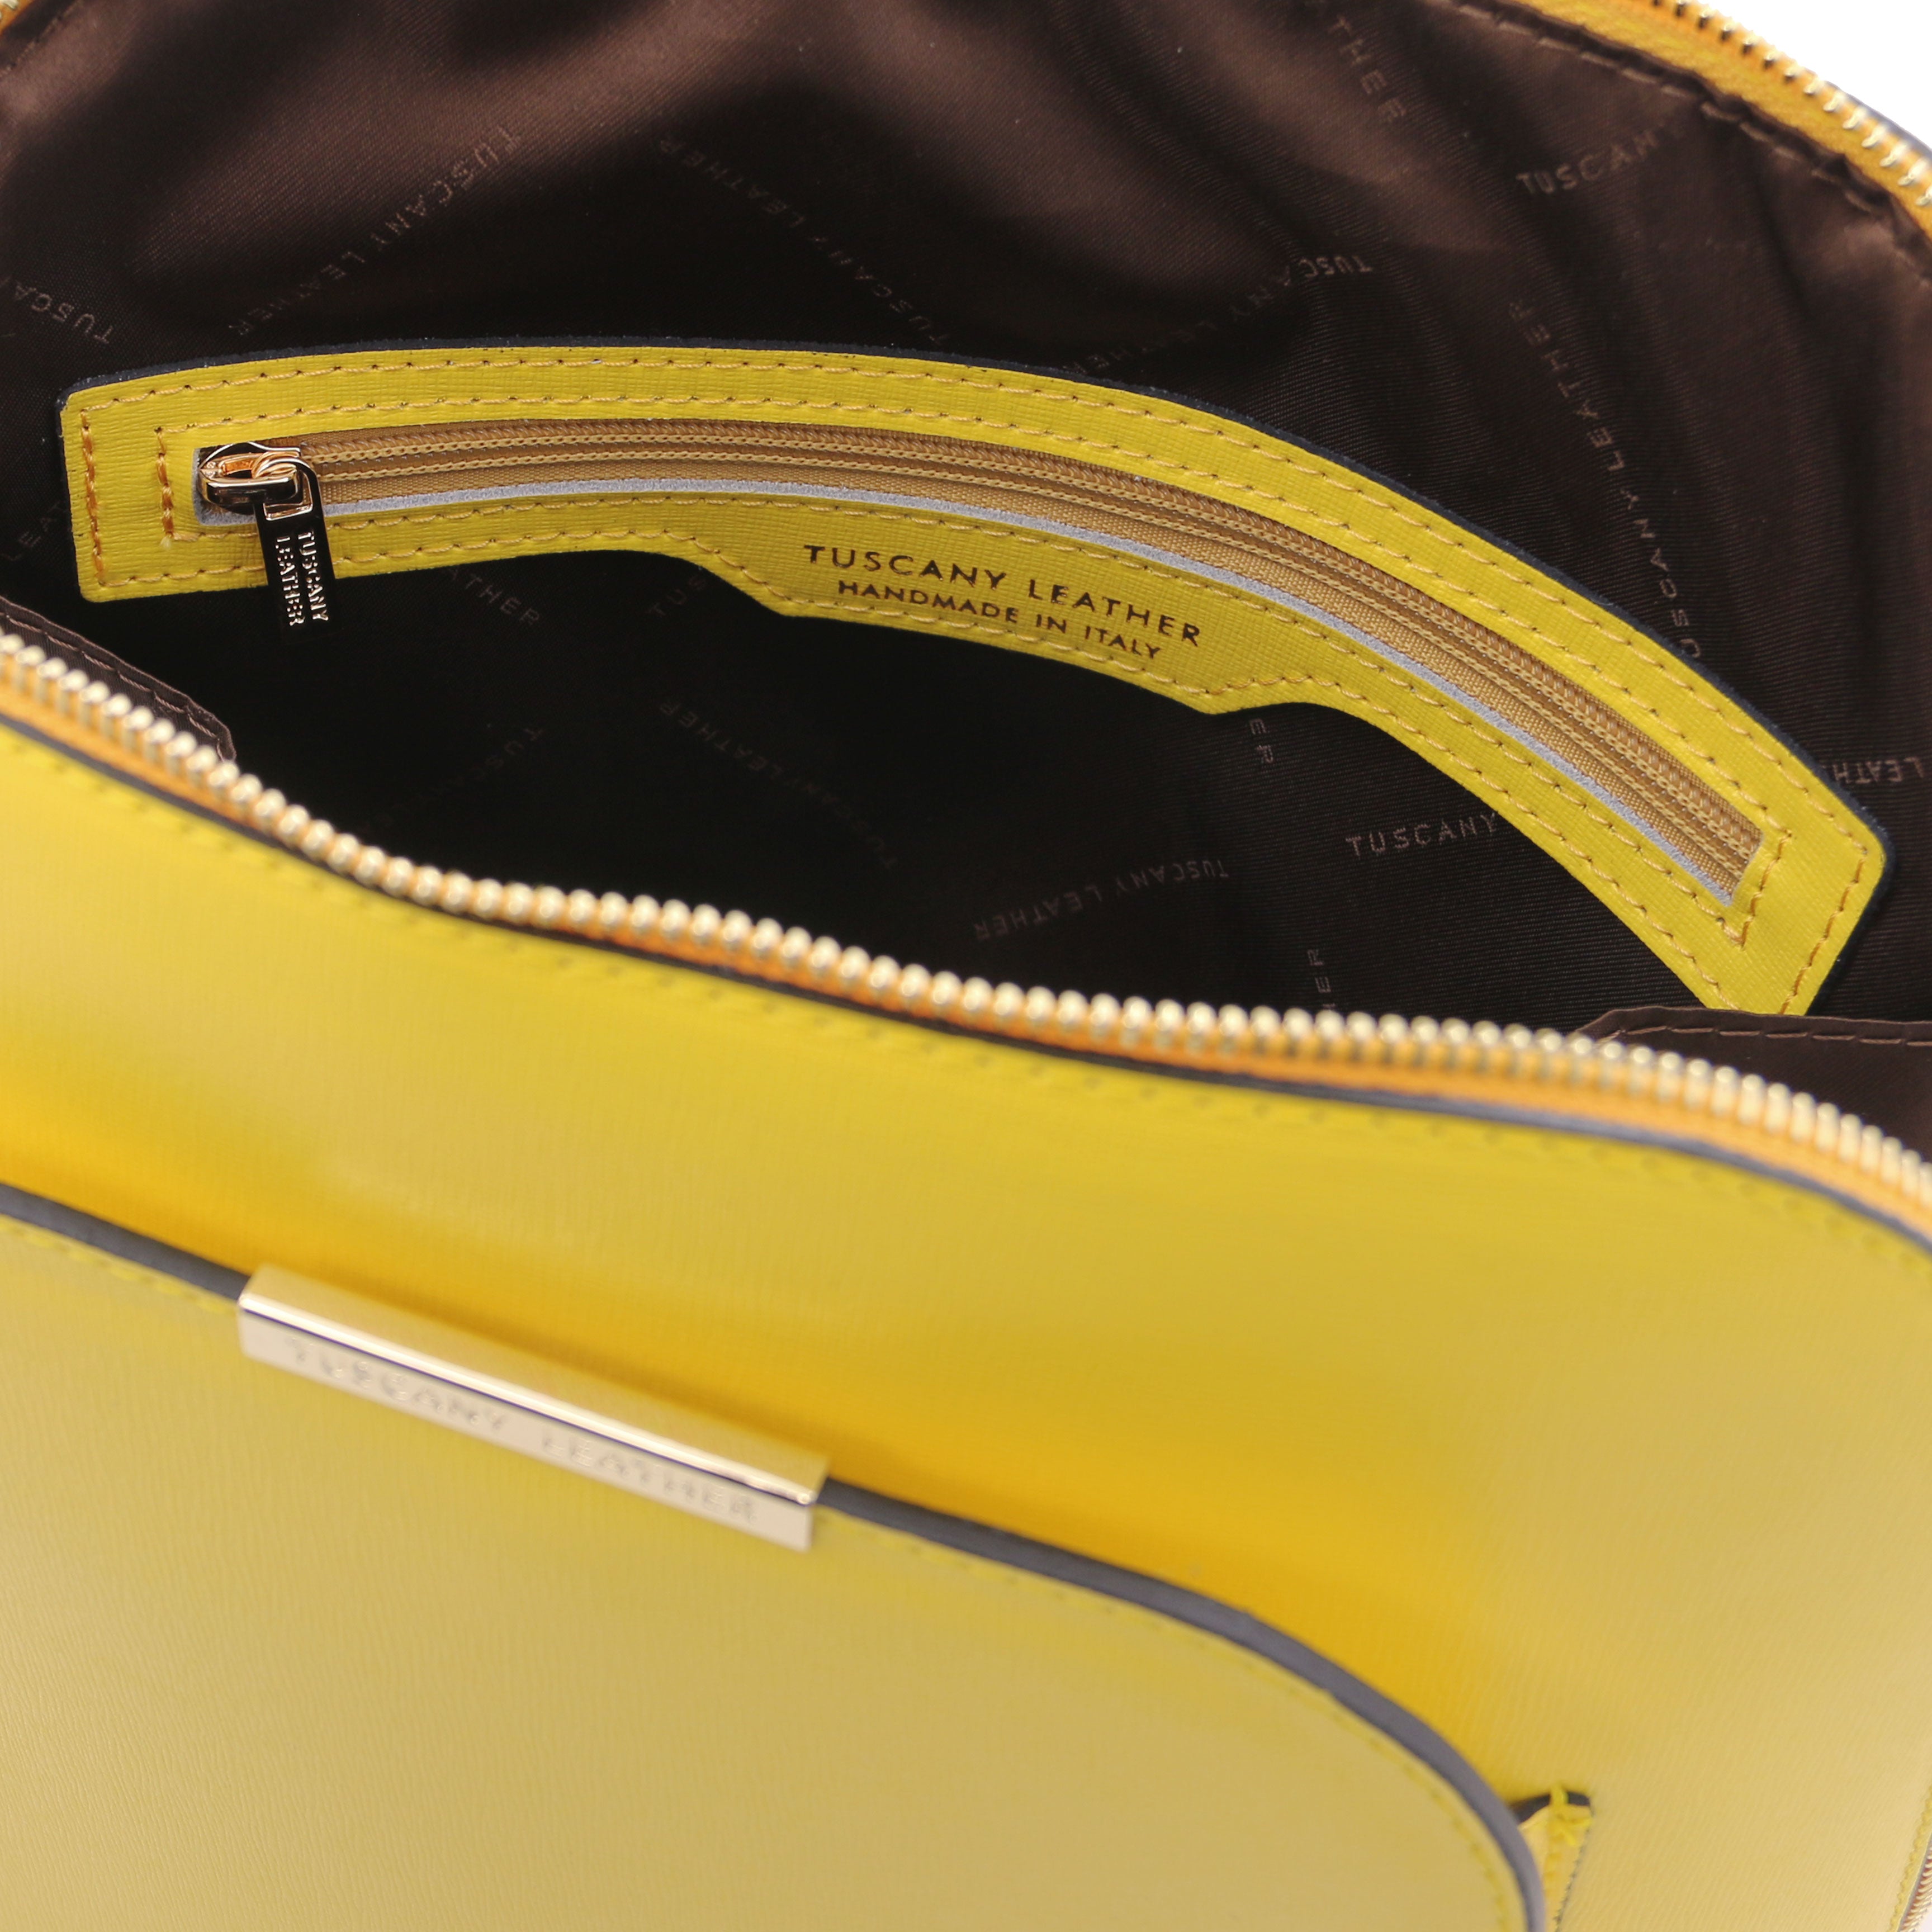 TL Bag Saffiano Italian Leather Backpack